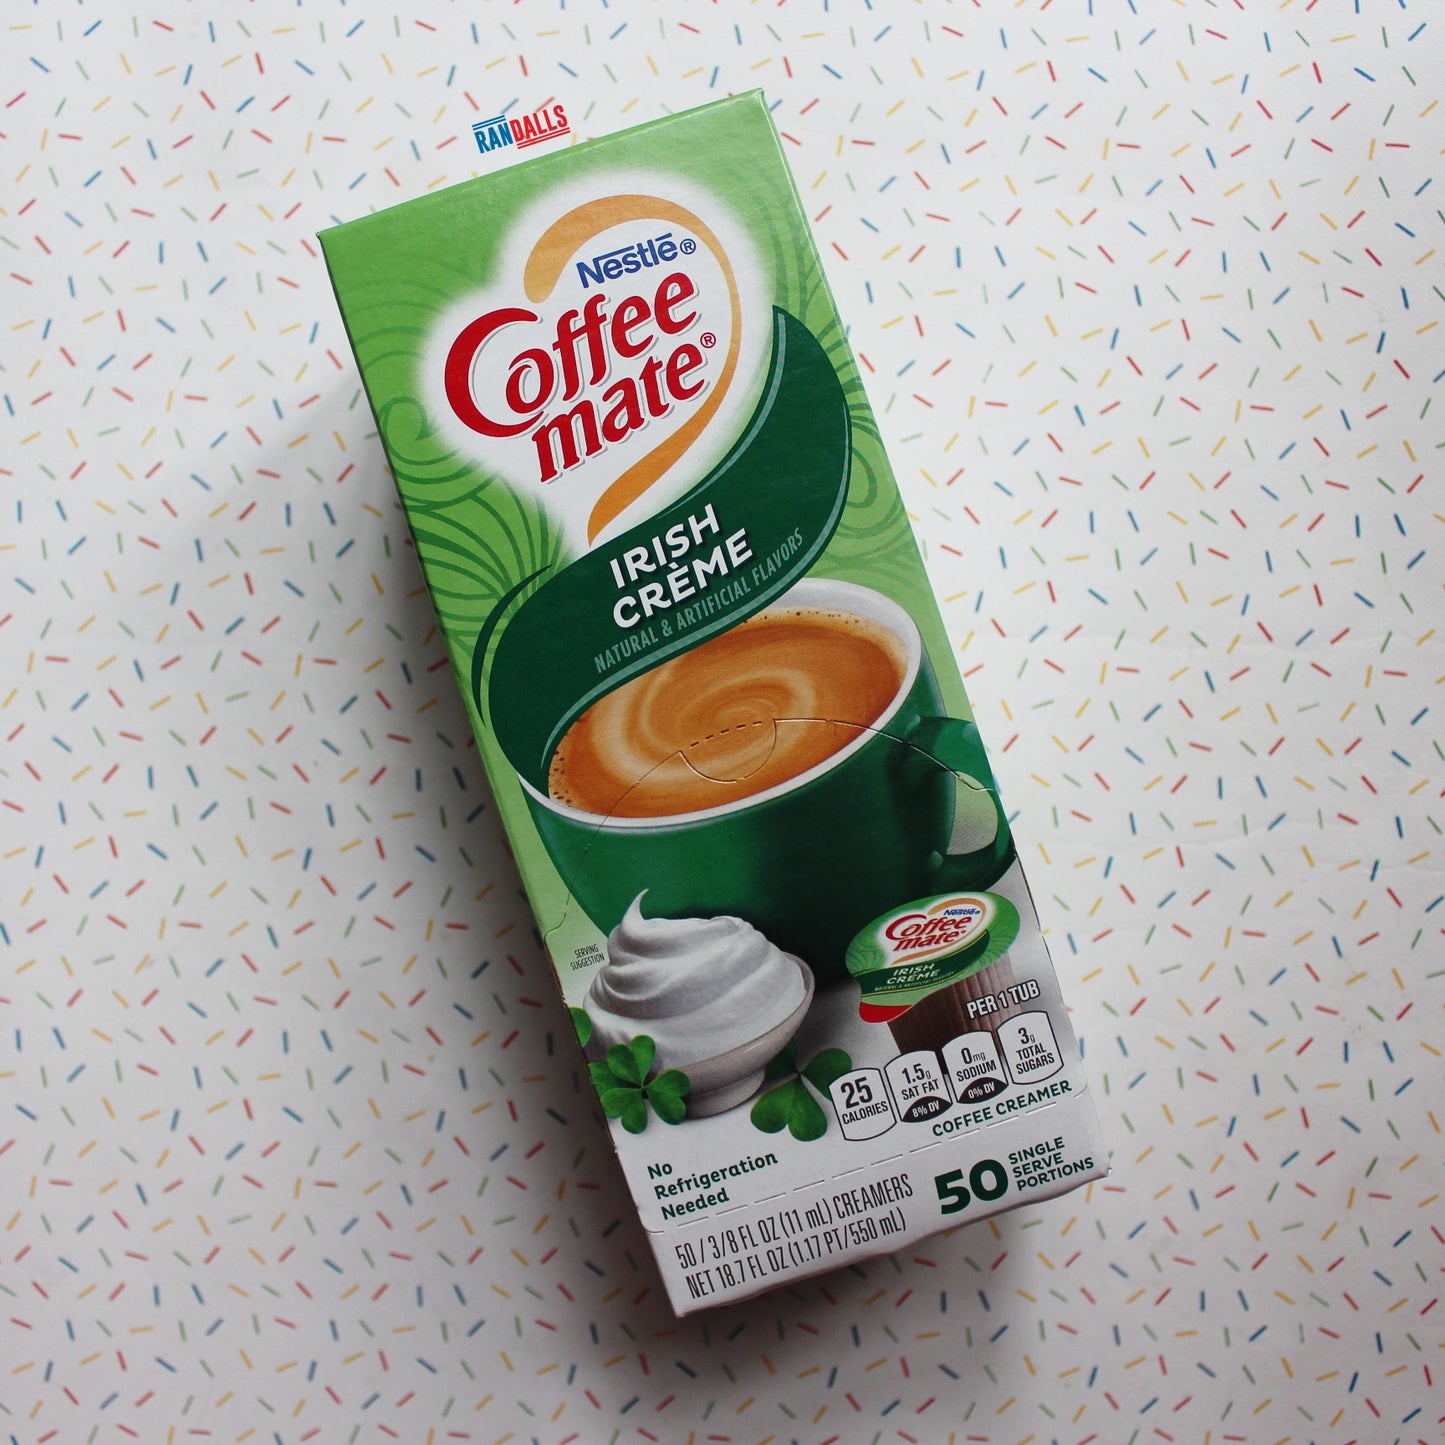 coffee-mate irish creme, coffeemate, coffee mate, uht, milk, nestle, box of 50, randalls